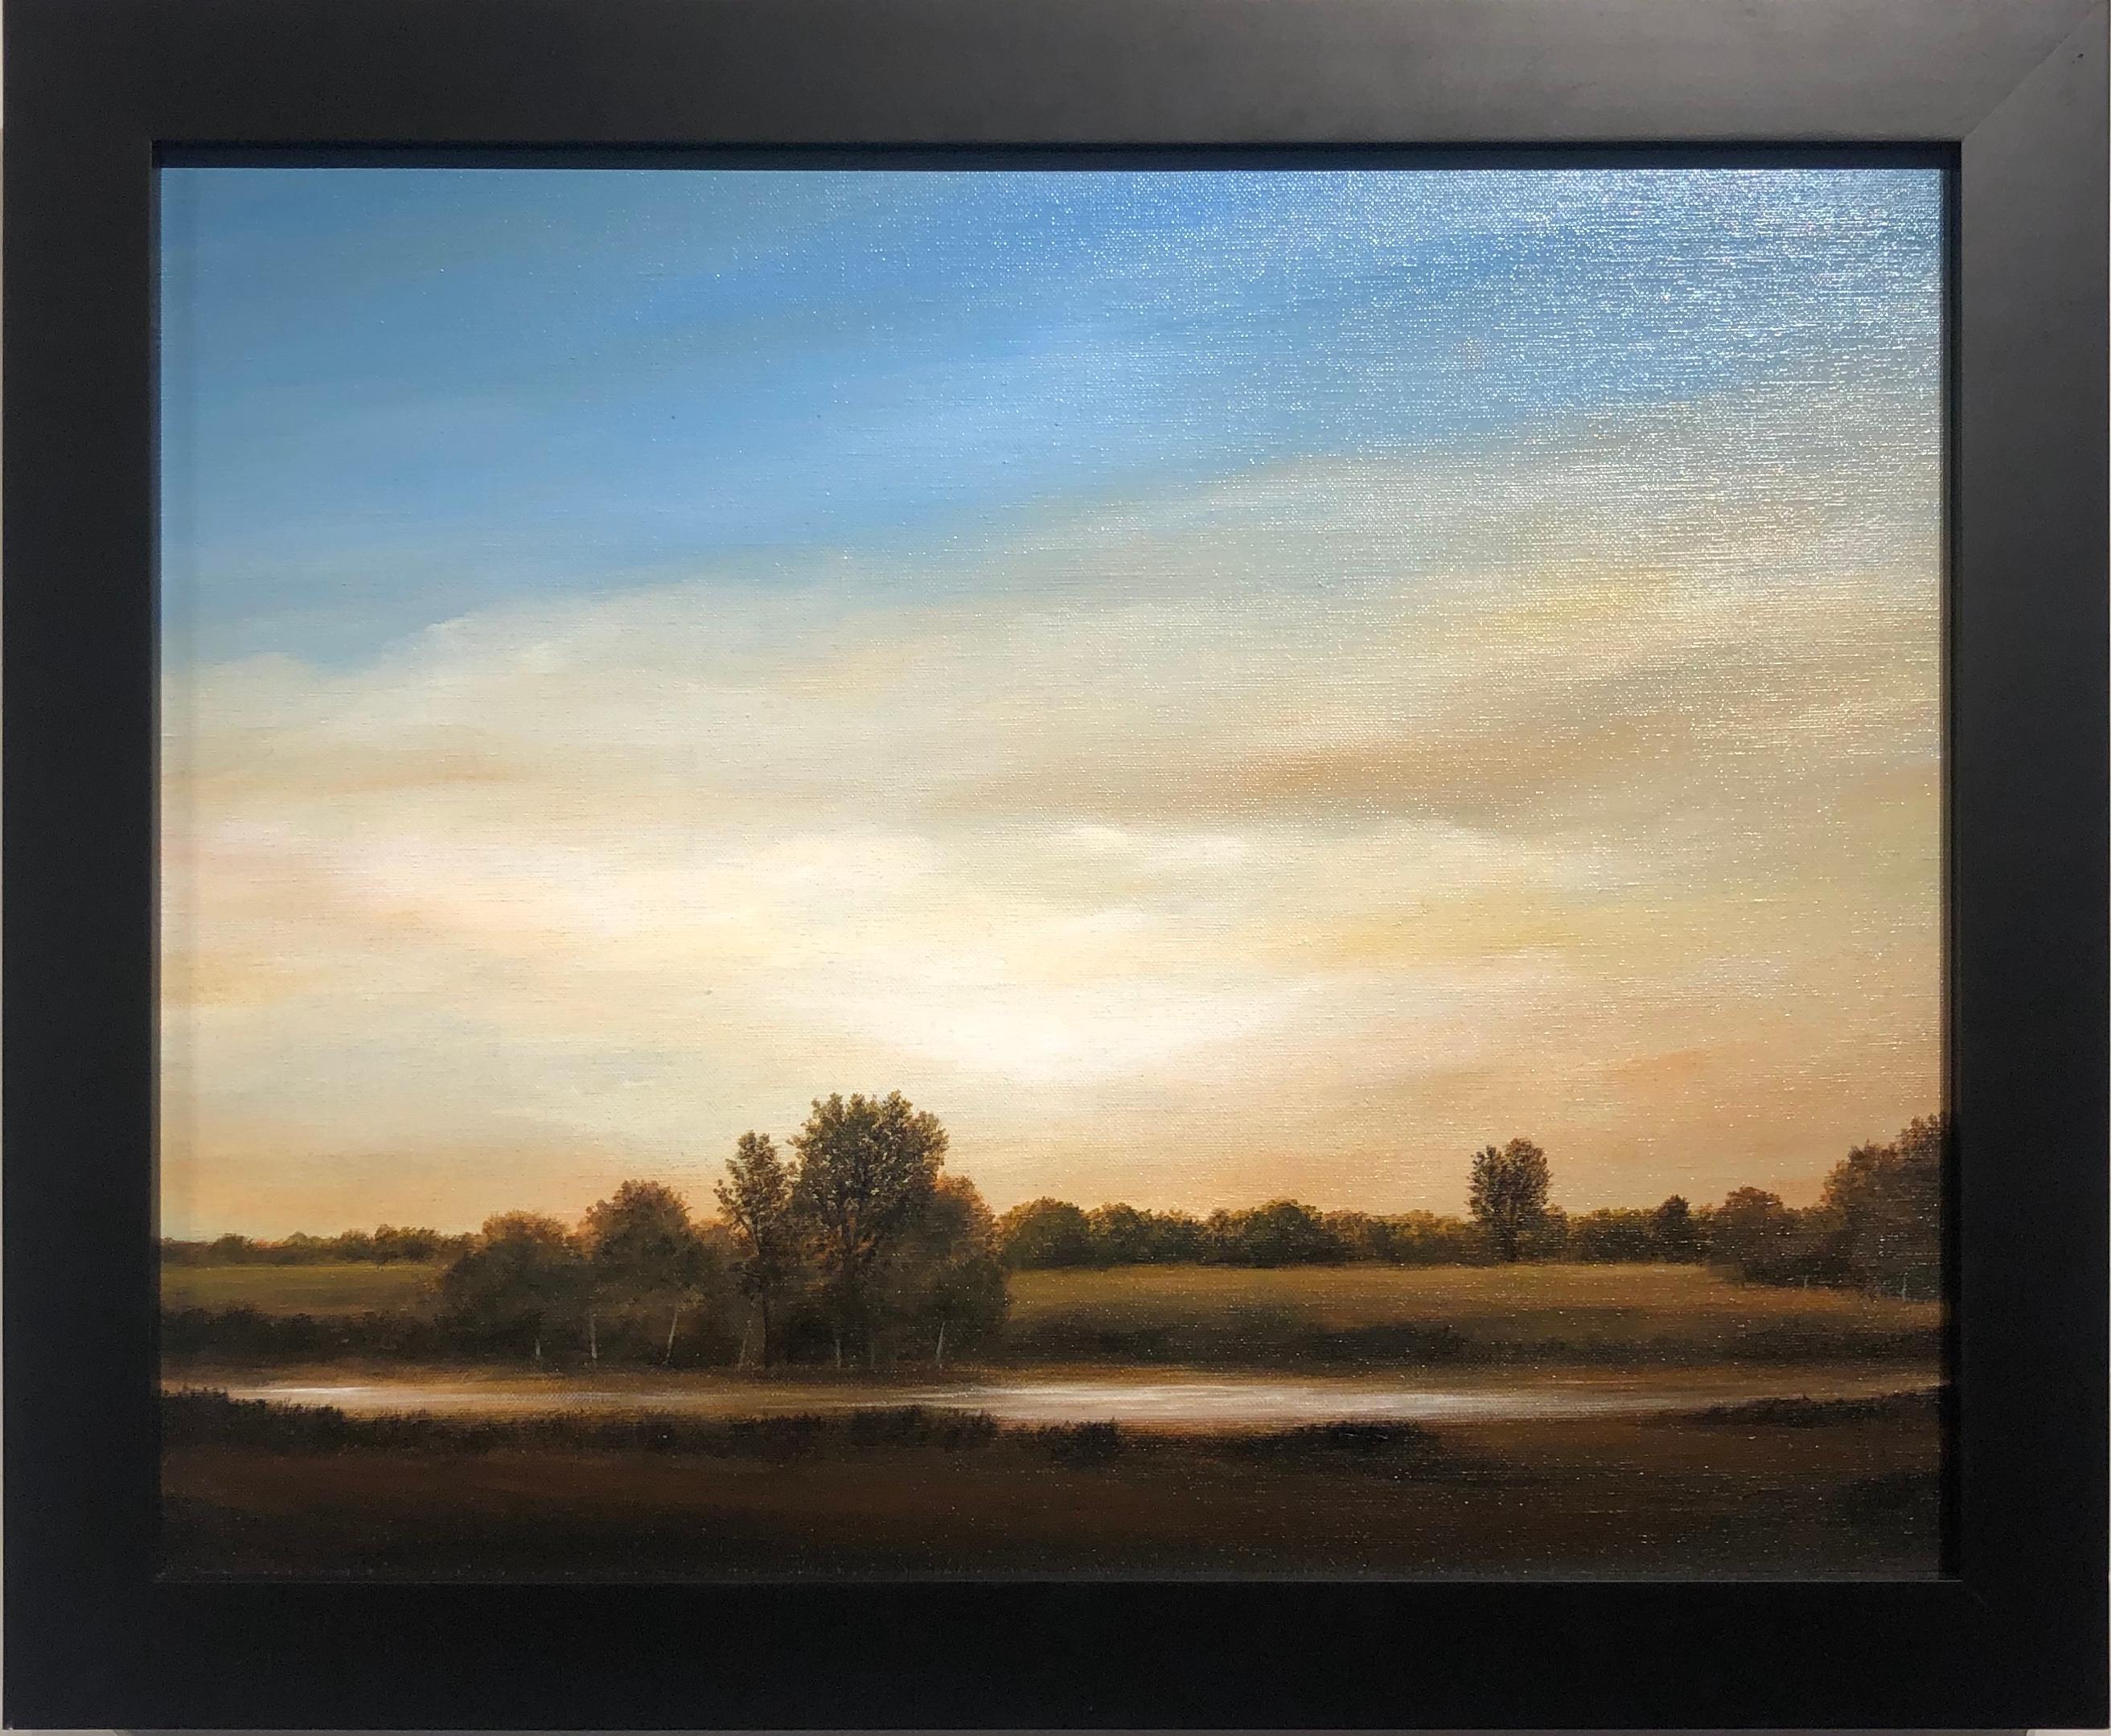  Streams of Bloomington, Serene Landscape with Vast Hazy Blue Sky, Framed - Painting by Ahzad Bogosian